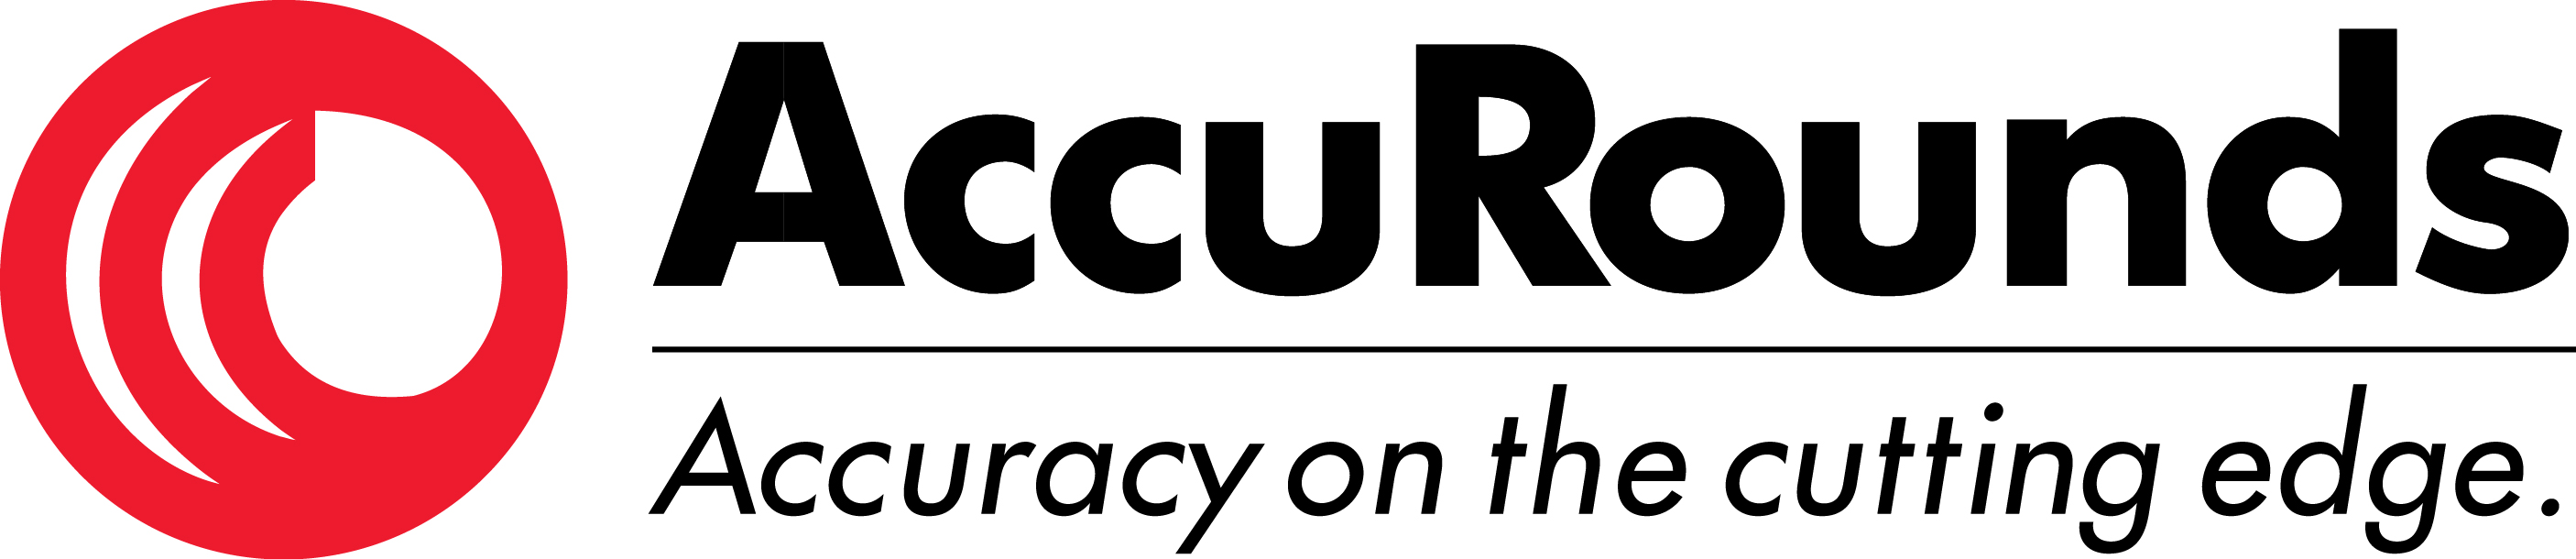 AccuRounds-logo